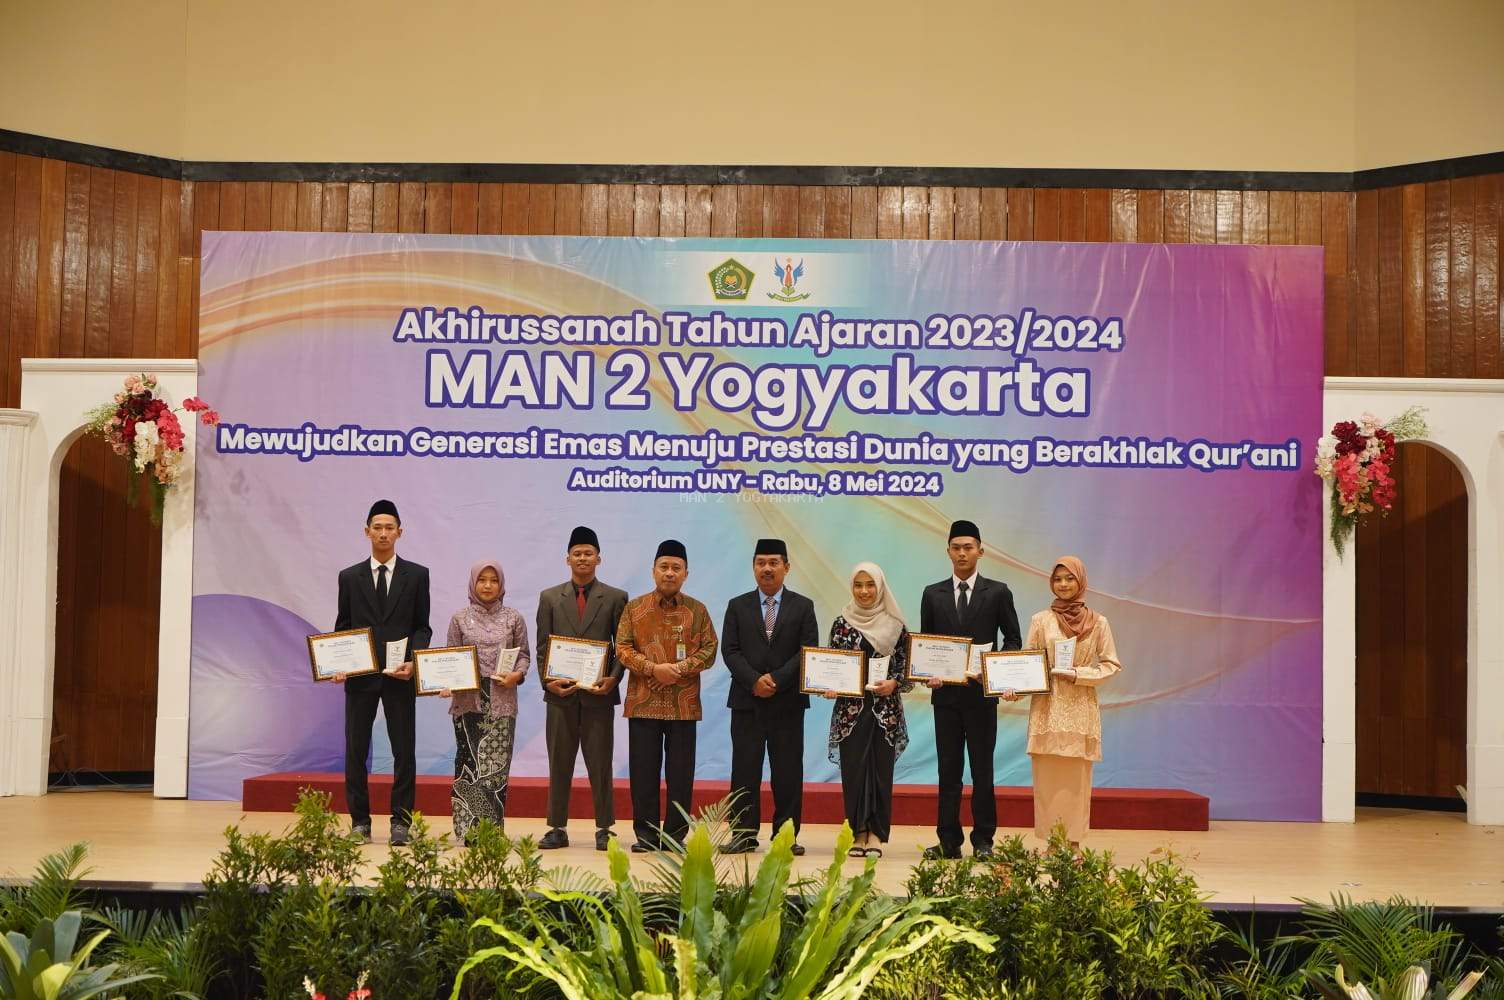 Enam Siswa MAN 2 Yogyakarta Berprestasi Olah Raga dan Seni Peroleh Penghargaan